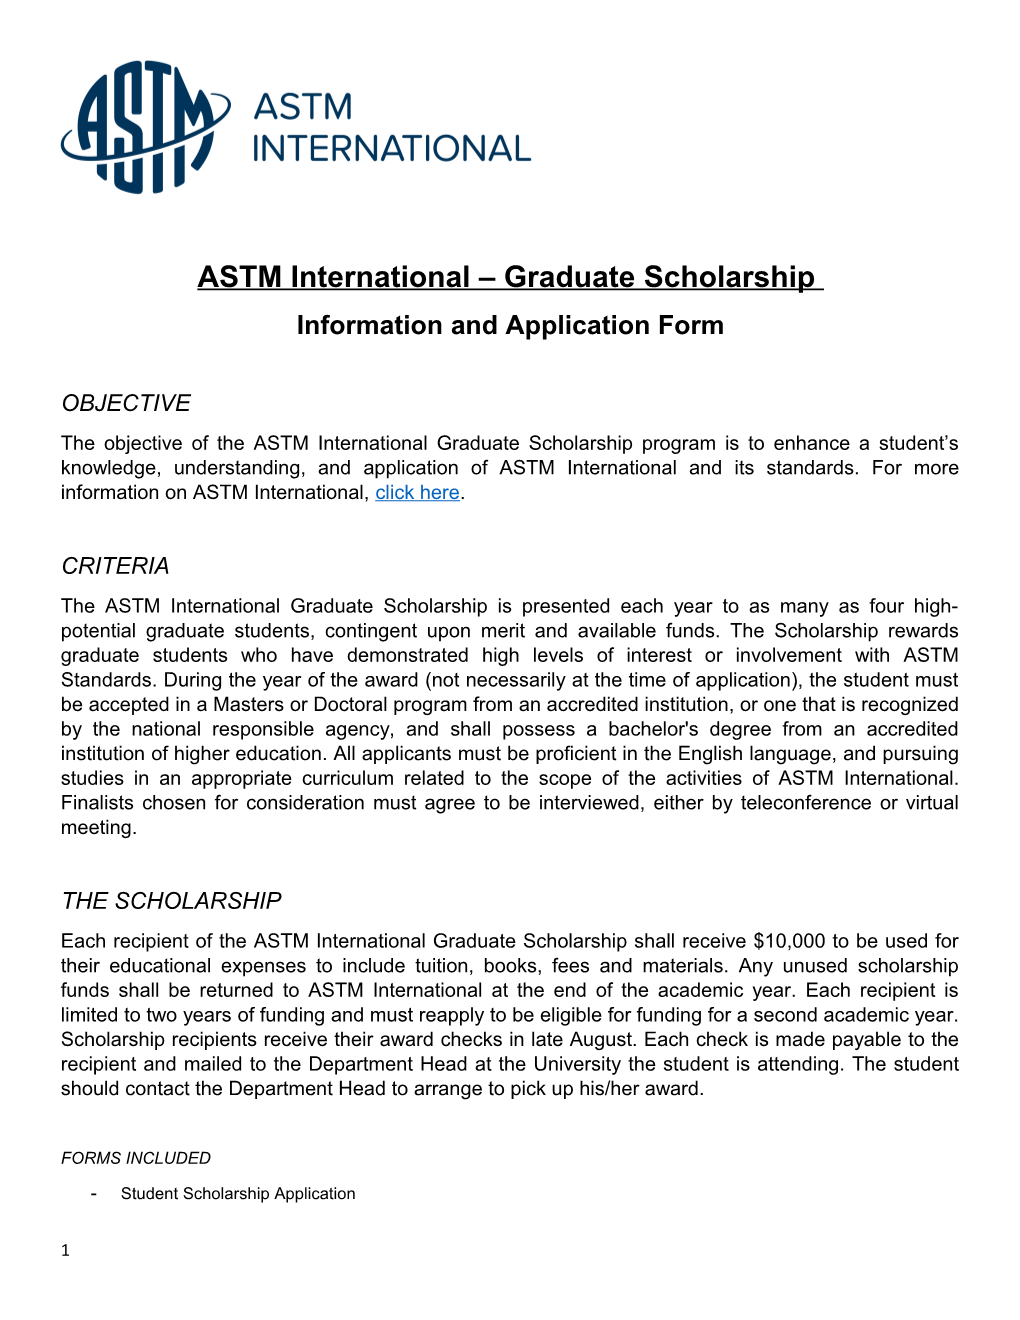 ASTM International Graduate Scholarship